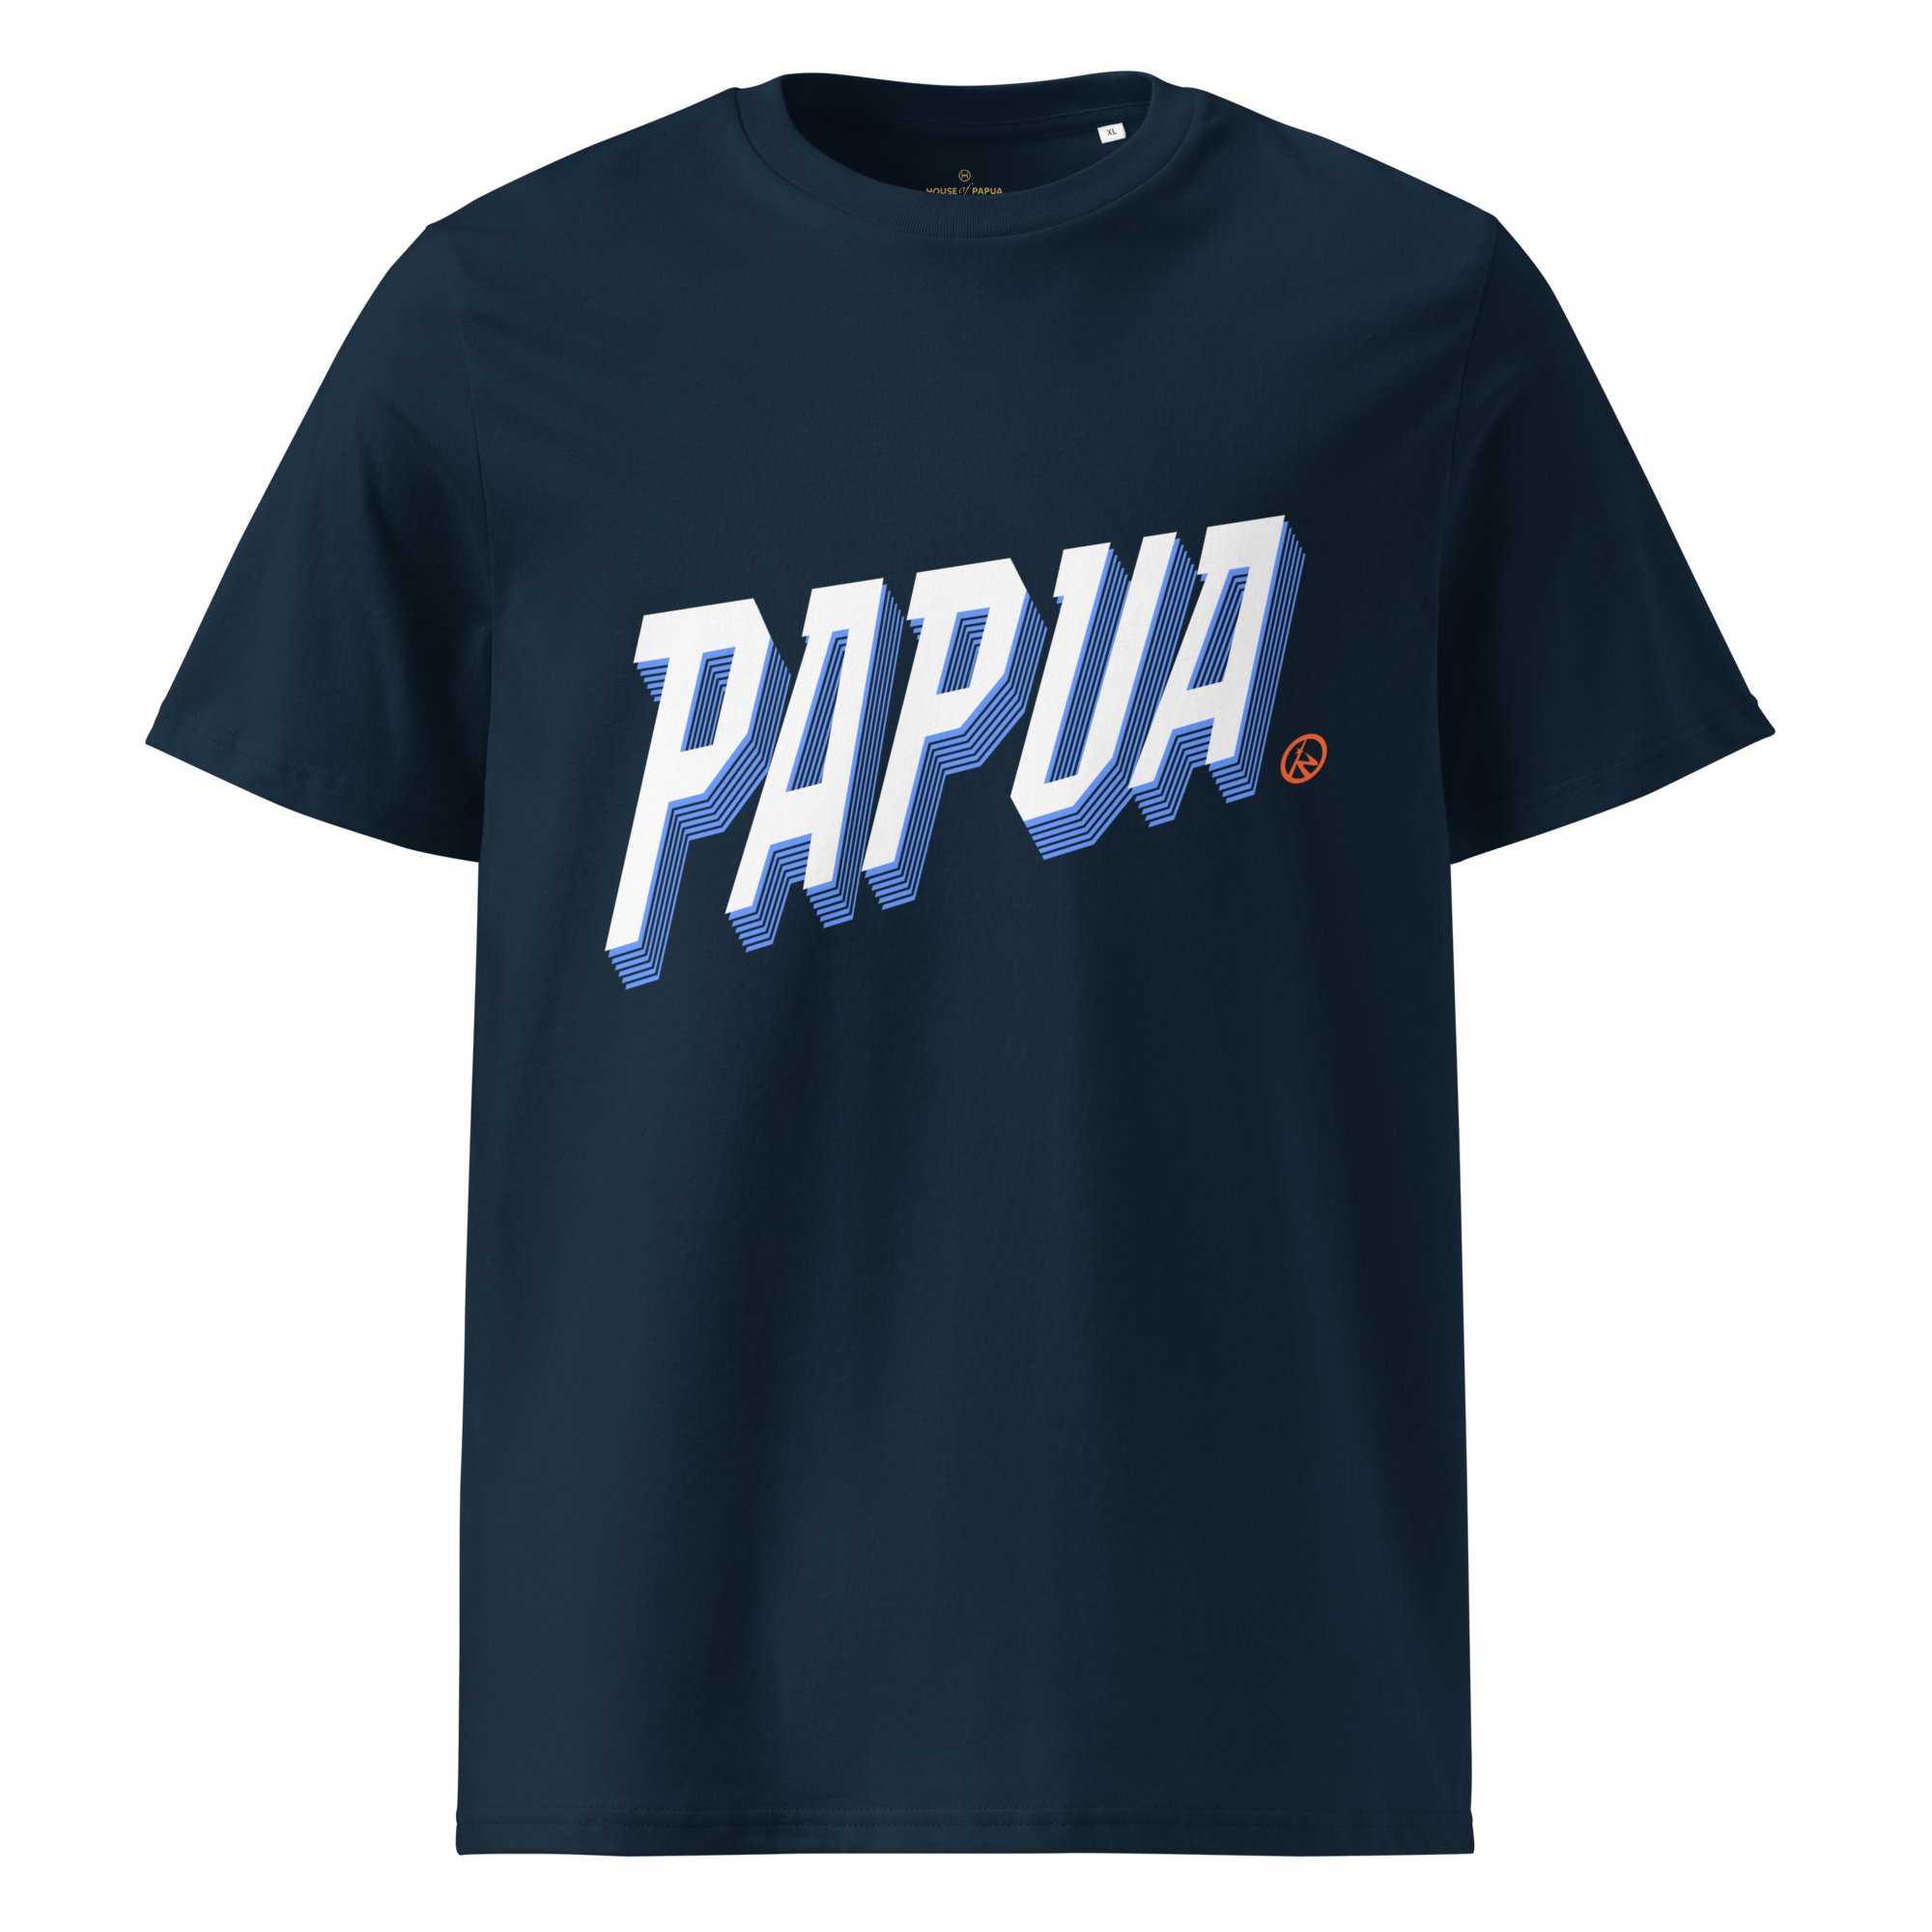 Papua organic cotton t-shirt